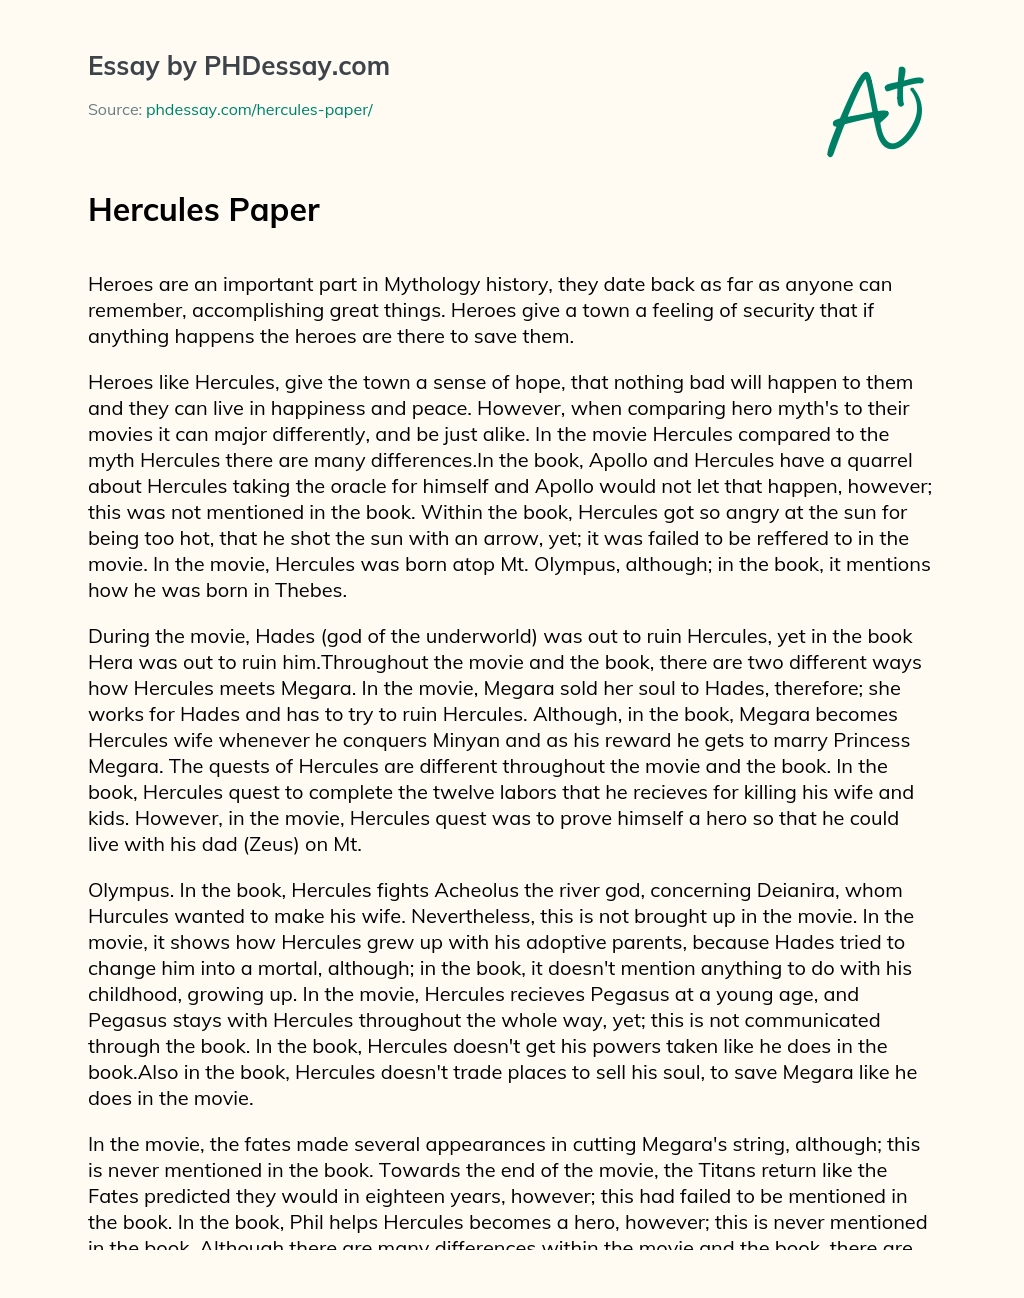 Hercules Paper essay